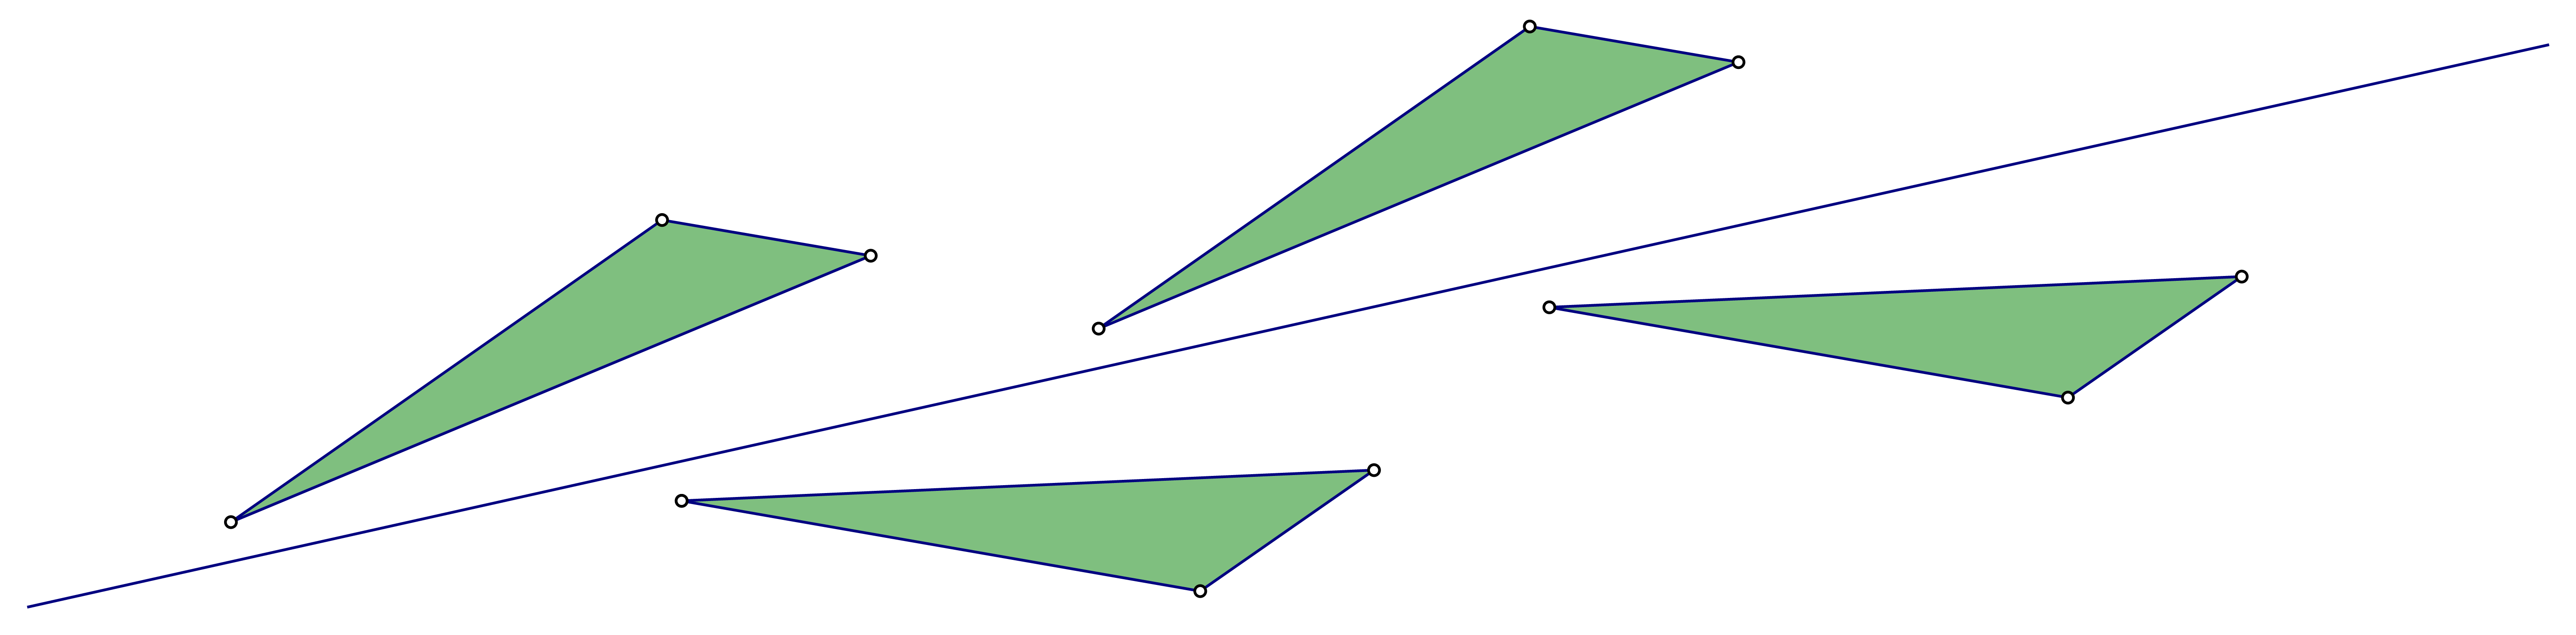 Na slici je prikazano klizno zrcaljenje raznostraničnog trokuta.